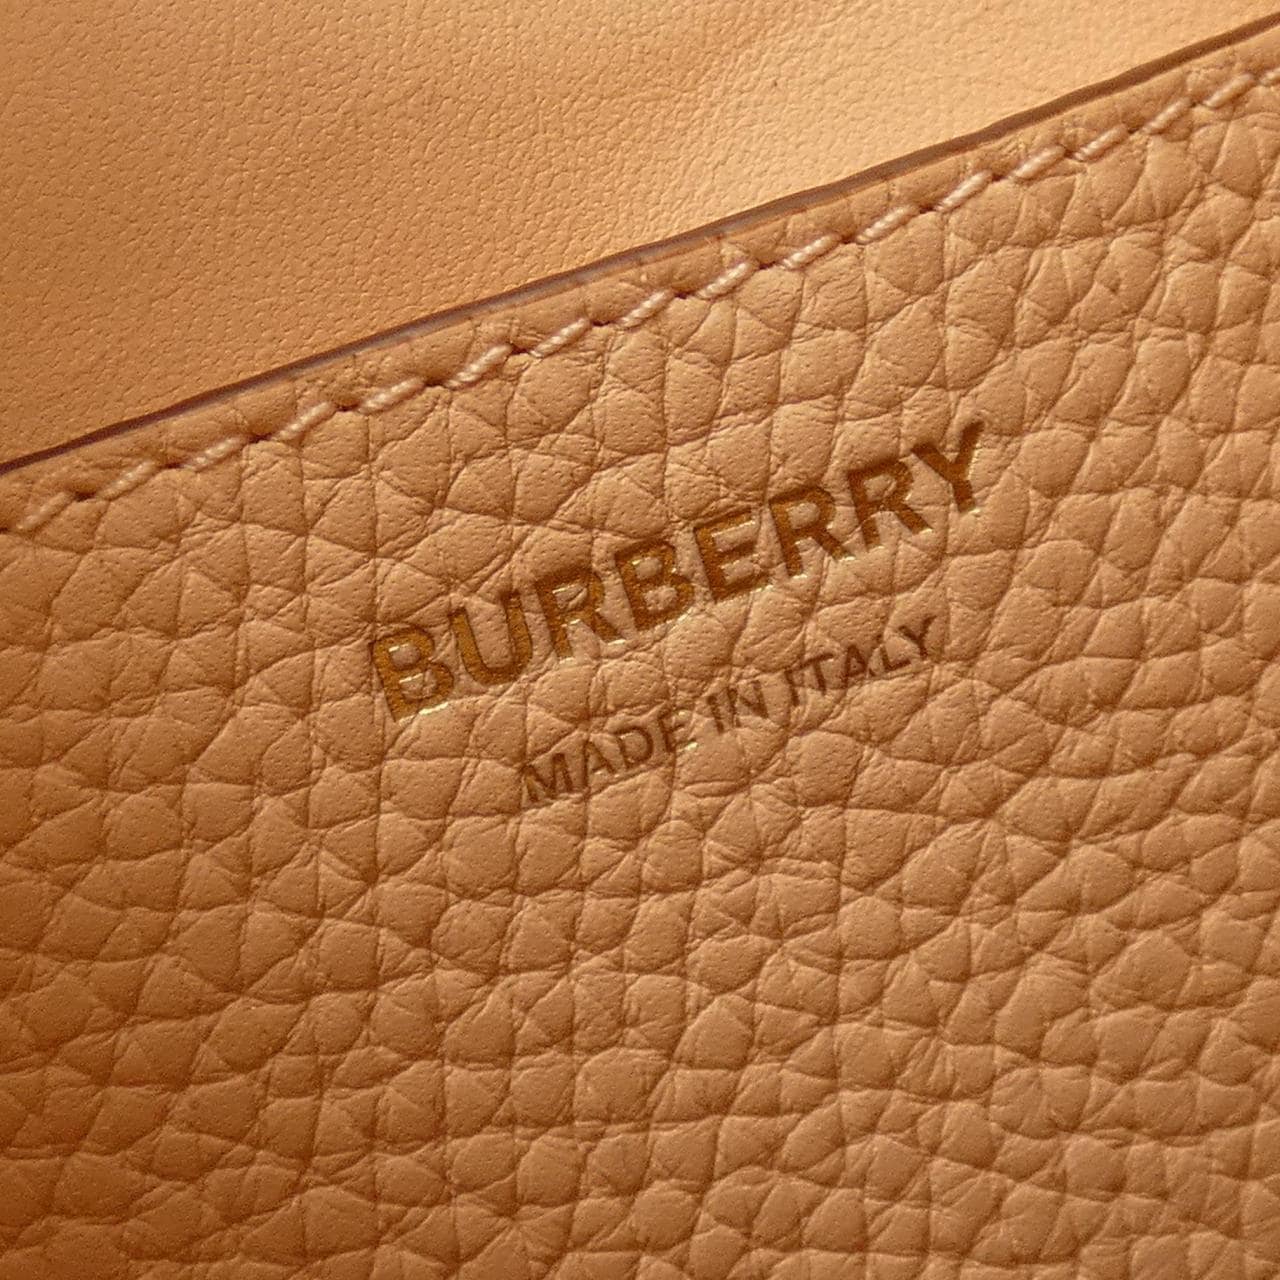 BURBERRY包